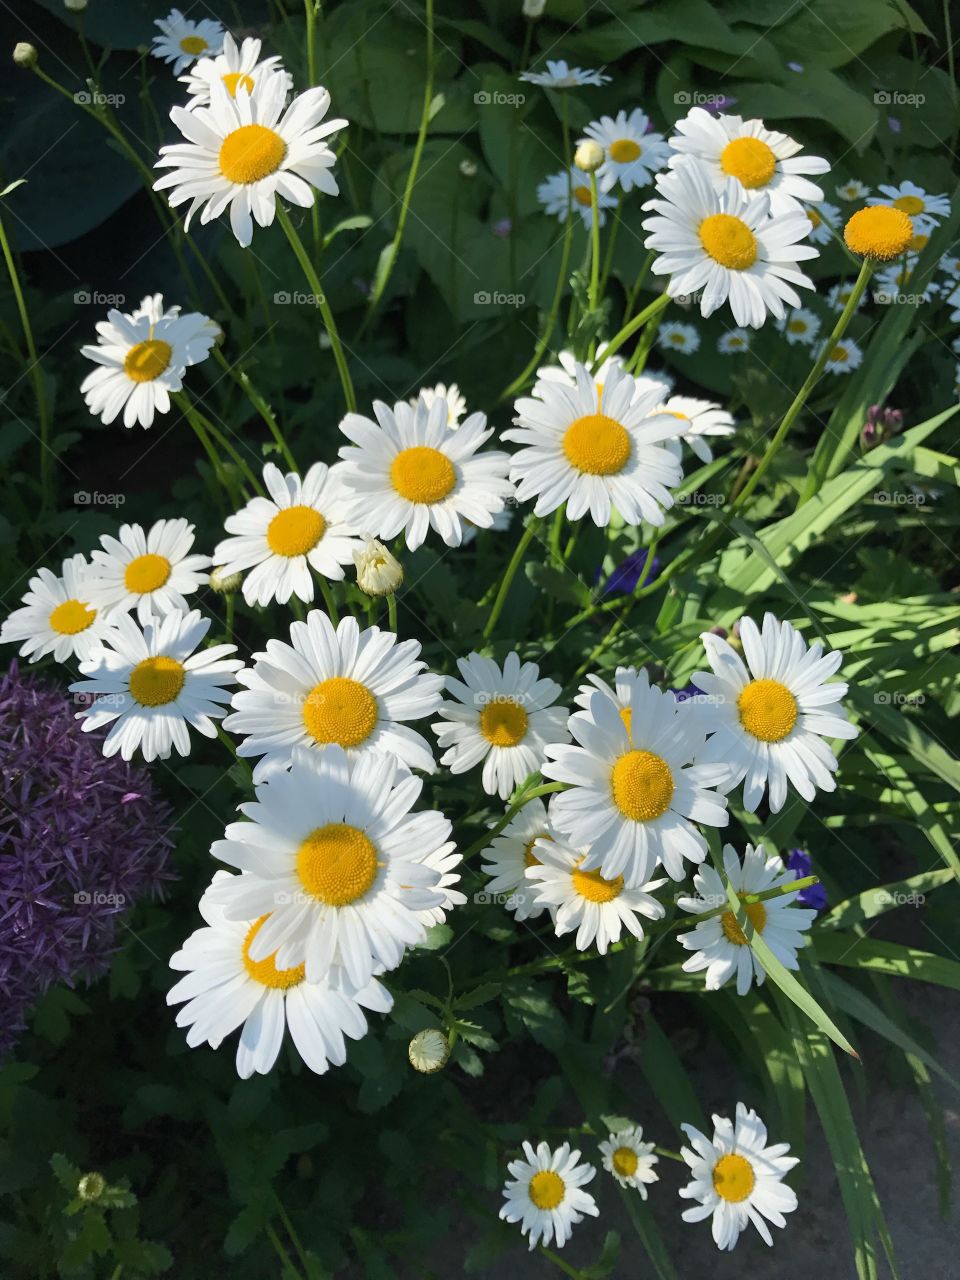 Pretty daisies in Spring at the Lauritzen Gardens in Omaha, Nebraska